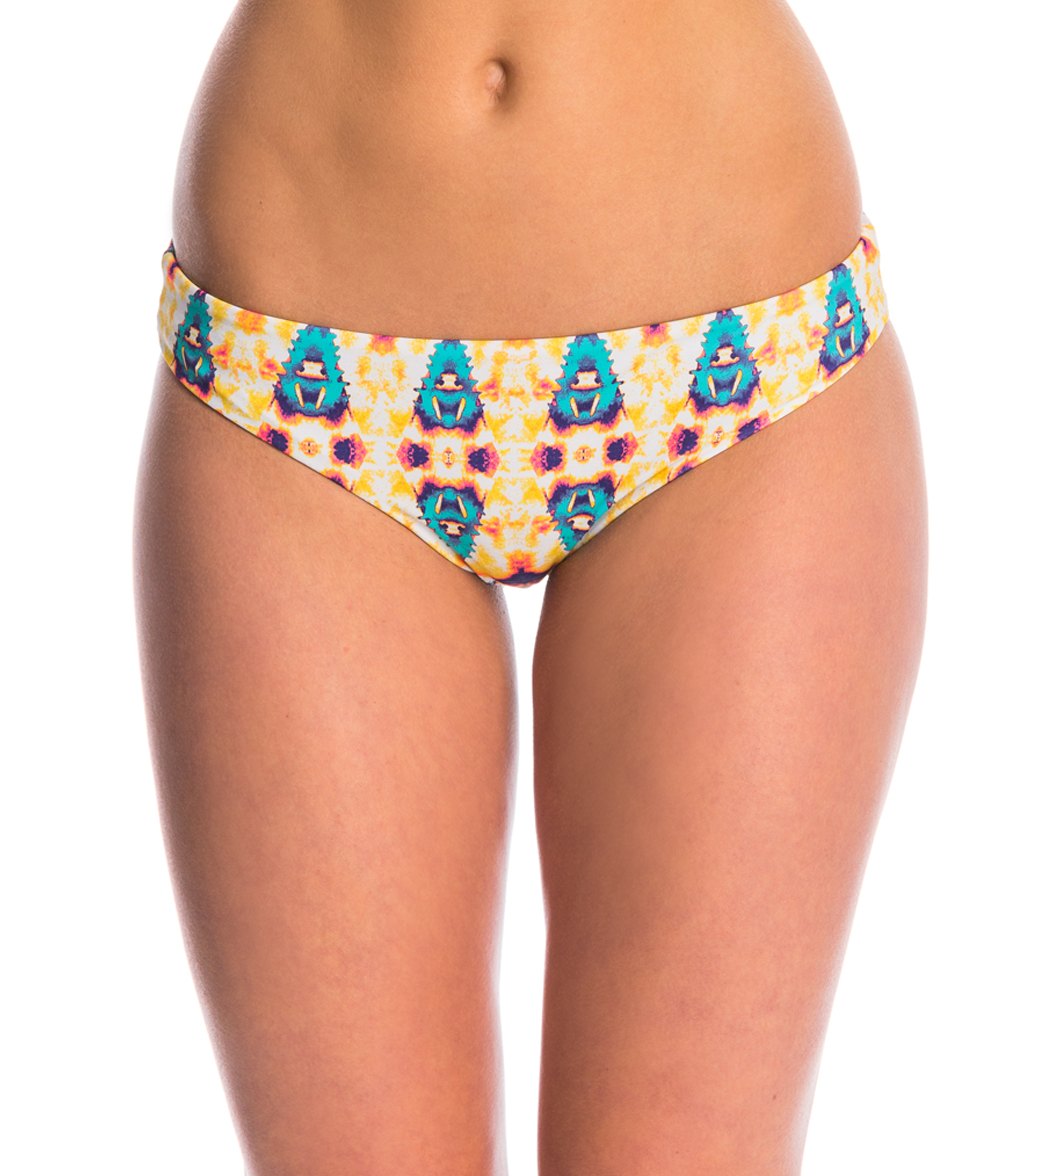 Hurley Swimwear Jagged Tie Dye Reversible Bikini Bottom - Multi X-Small - Swimoutlet.com